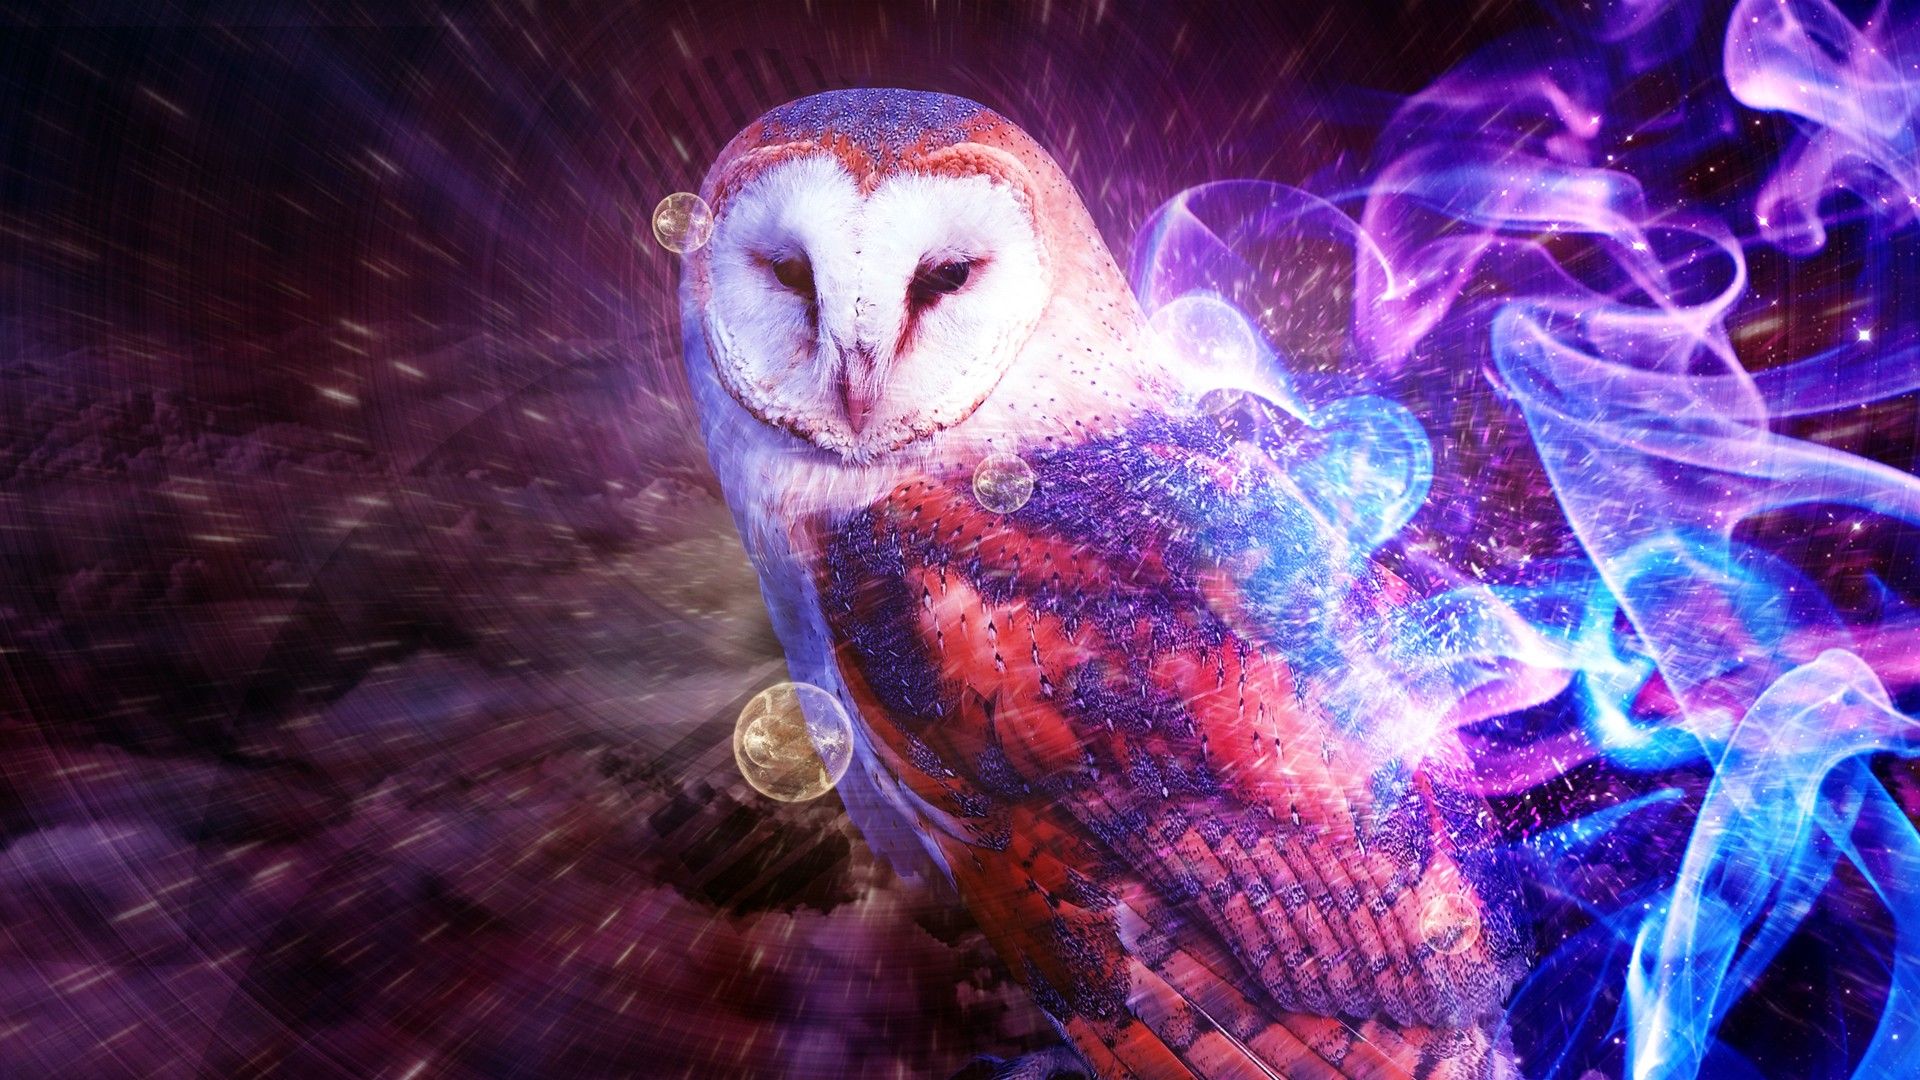 Owl Desktop Wallpaper